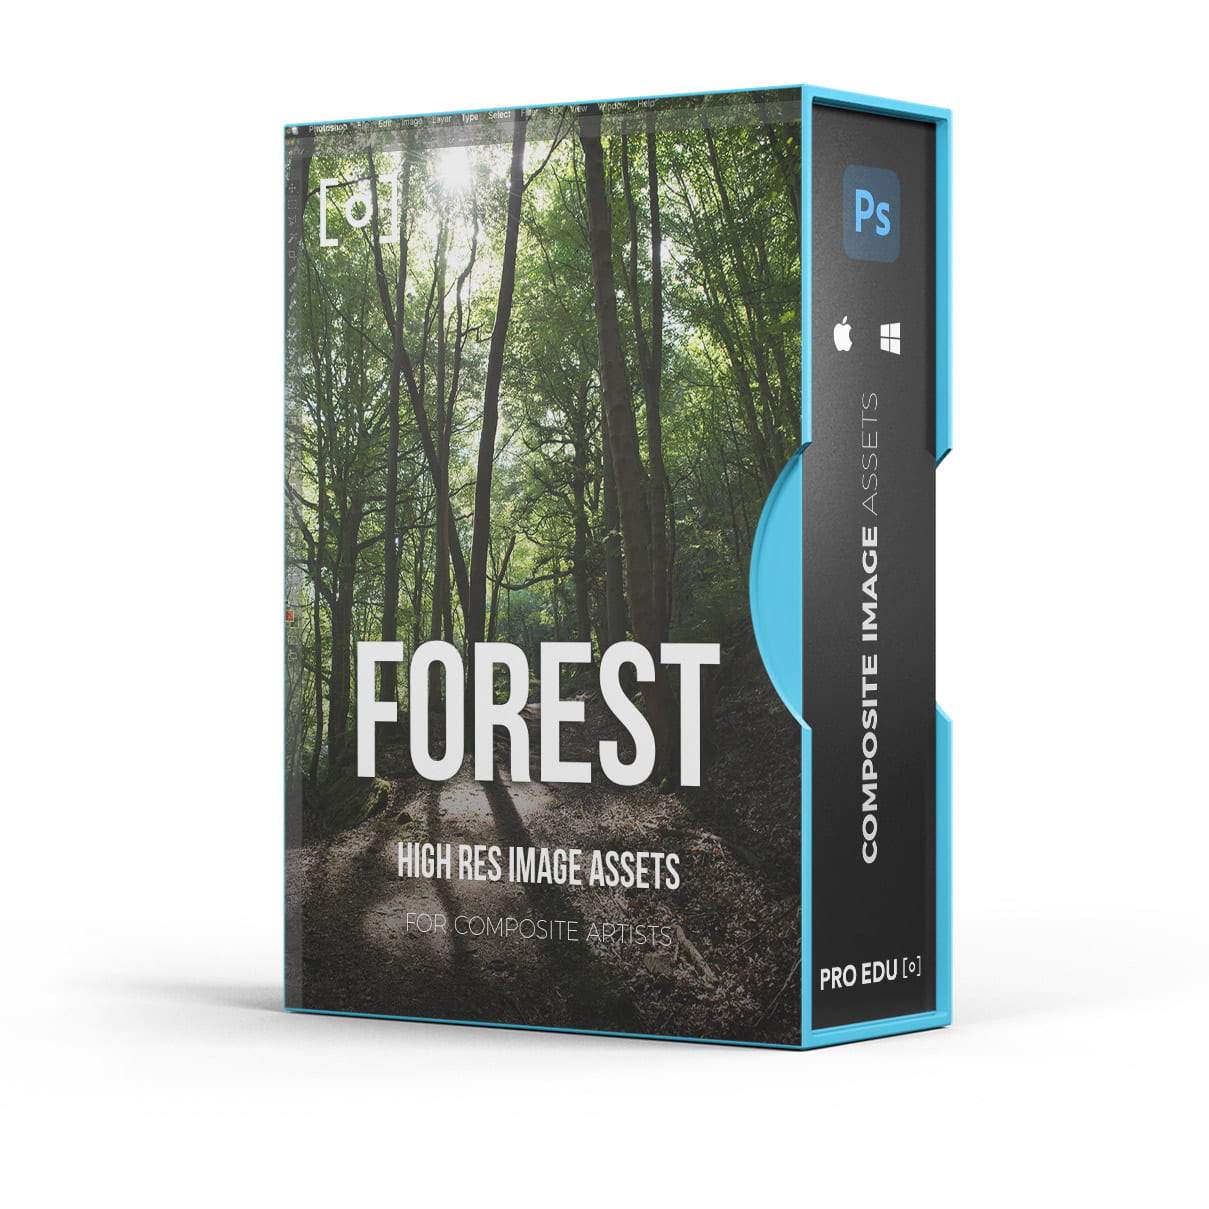 Composite Stock Asset Pack - Dappled Light Forest Photoshop Assets  PRO EDU PRO EDU